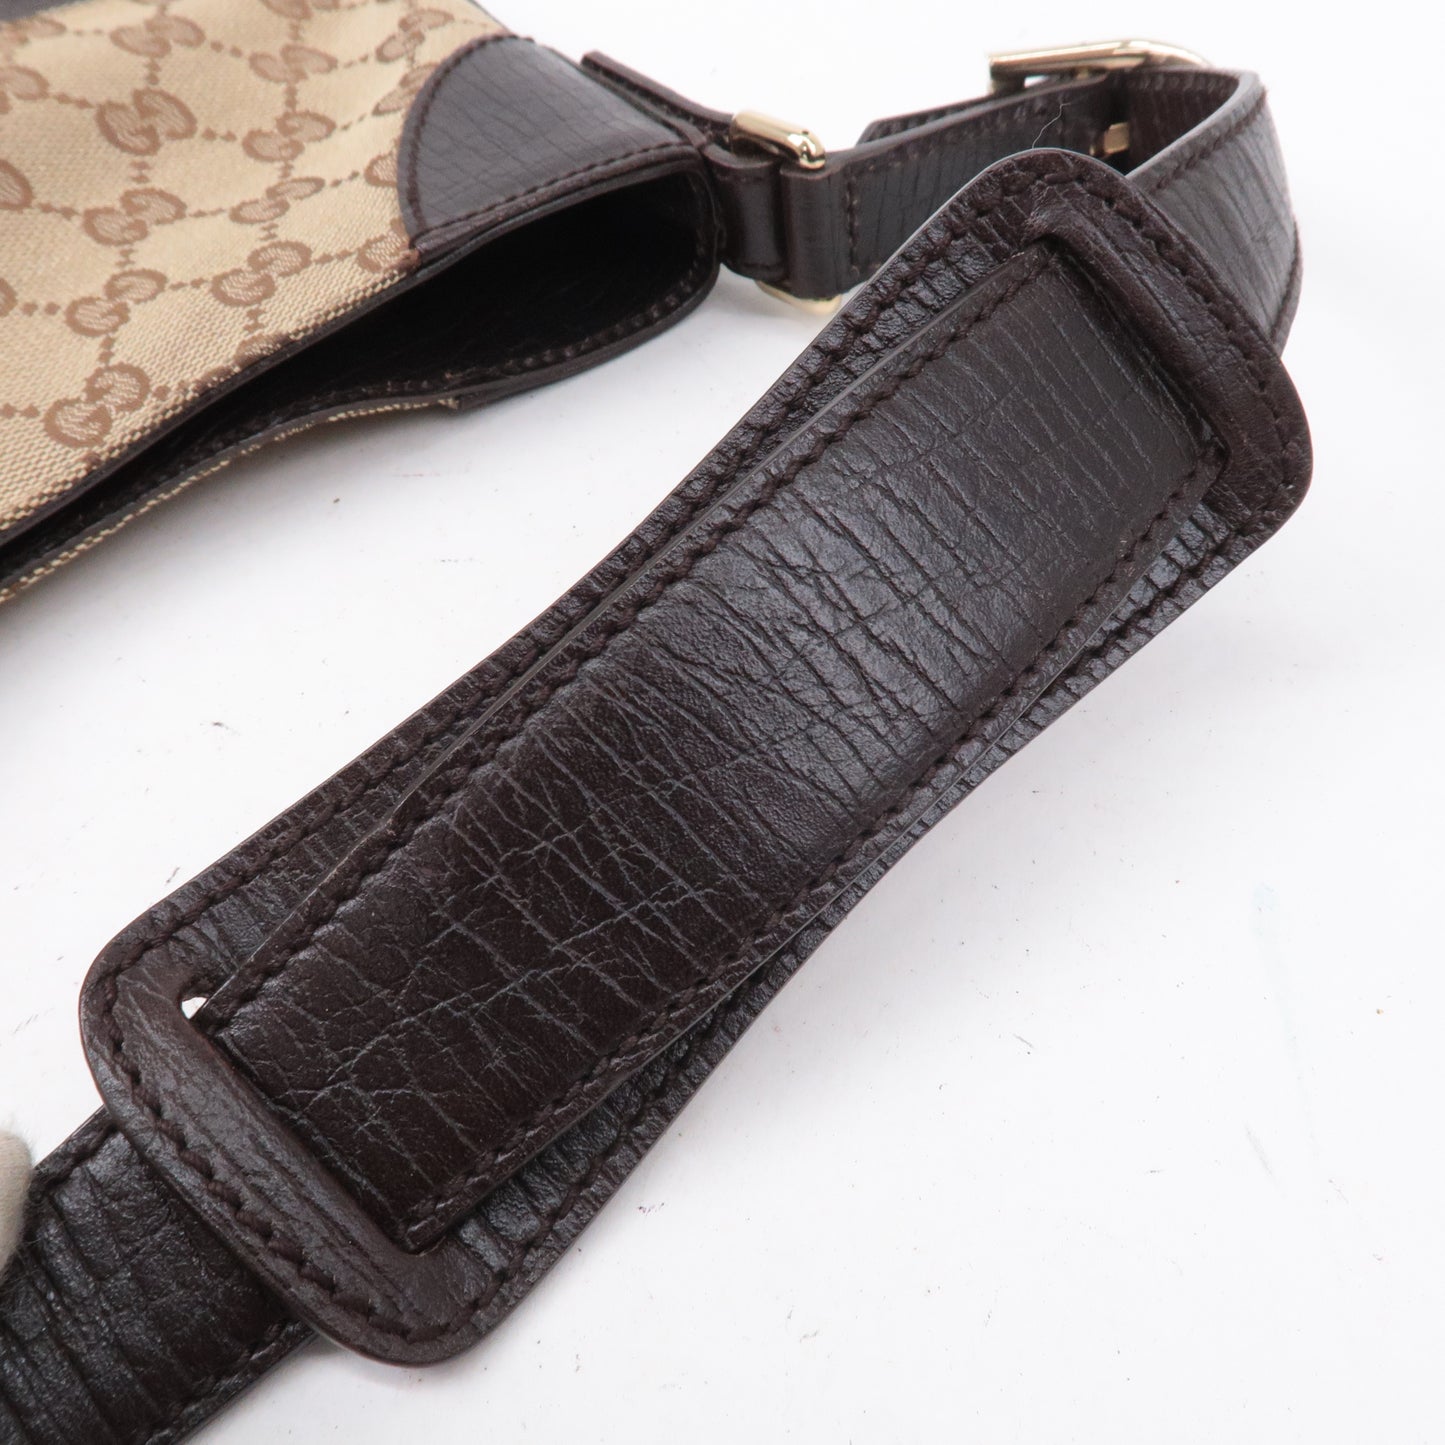 GUCCI Horsebit Sherry GG Canvas Leather Shoulder Bag Brown 137388